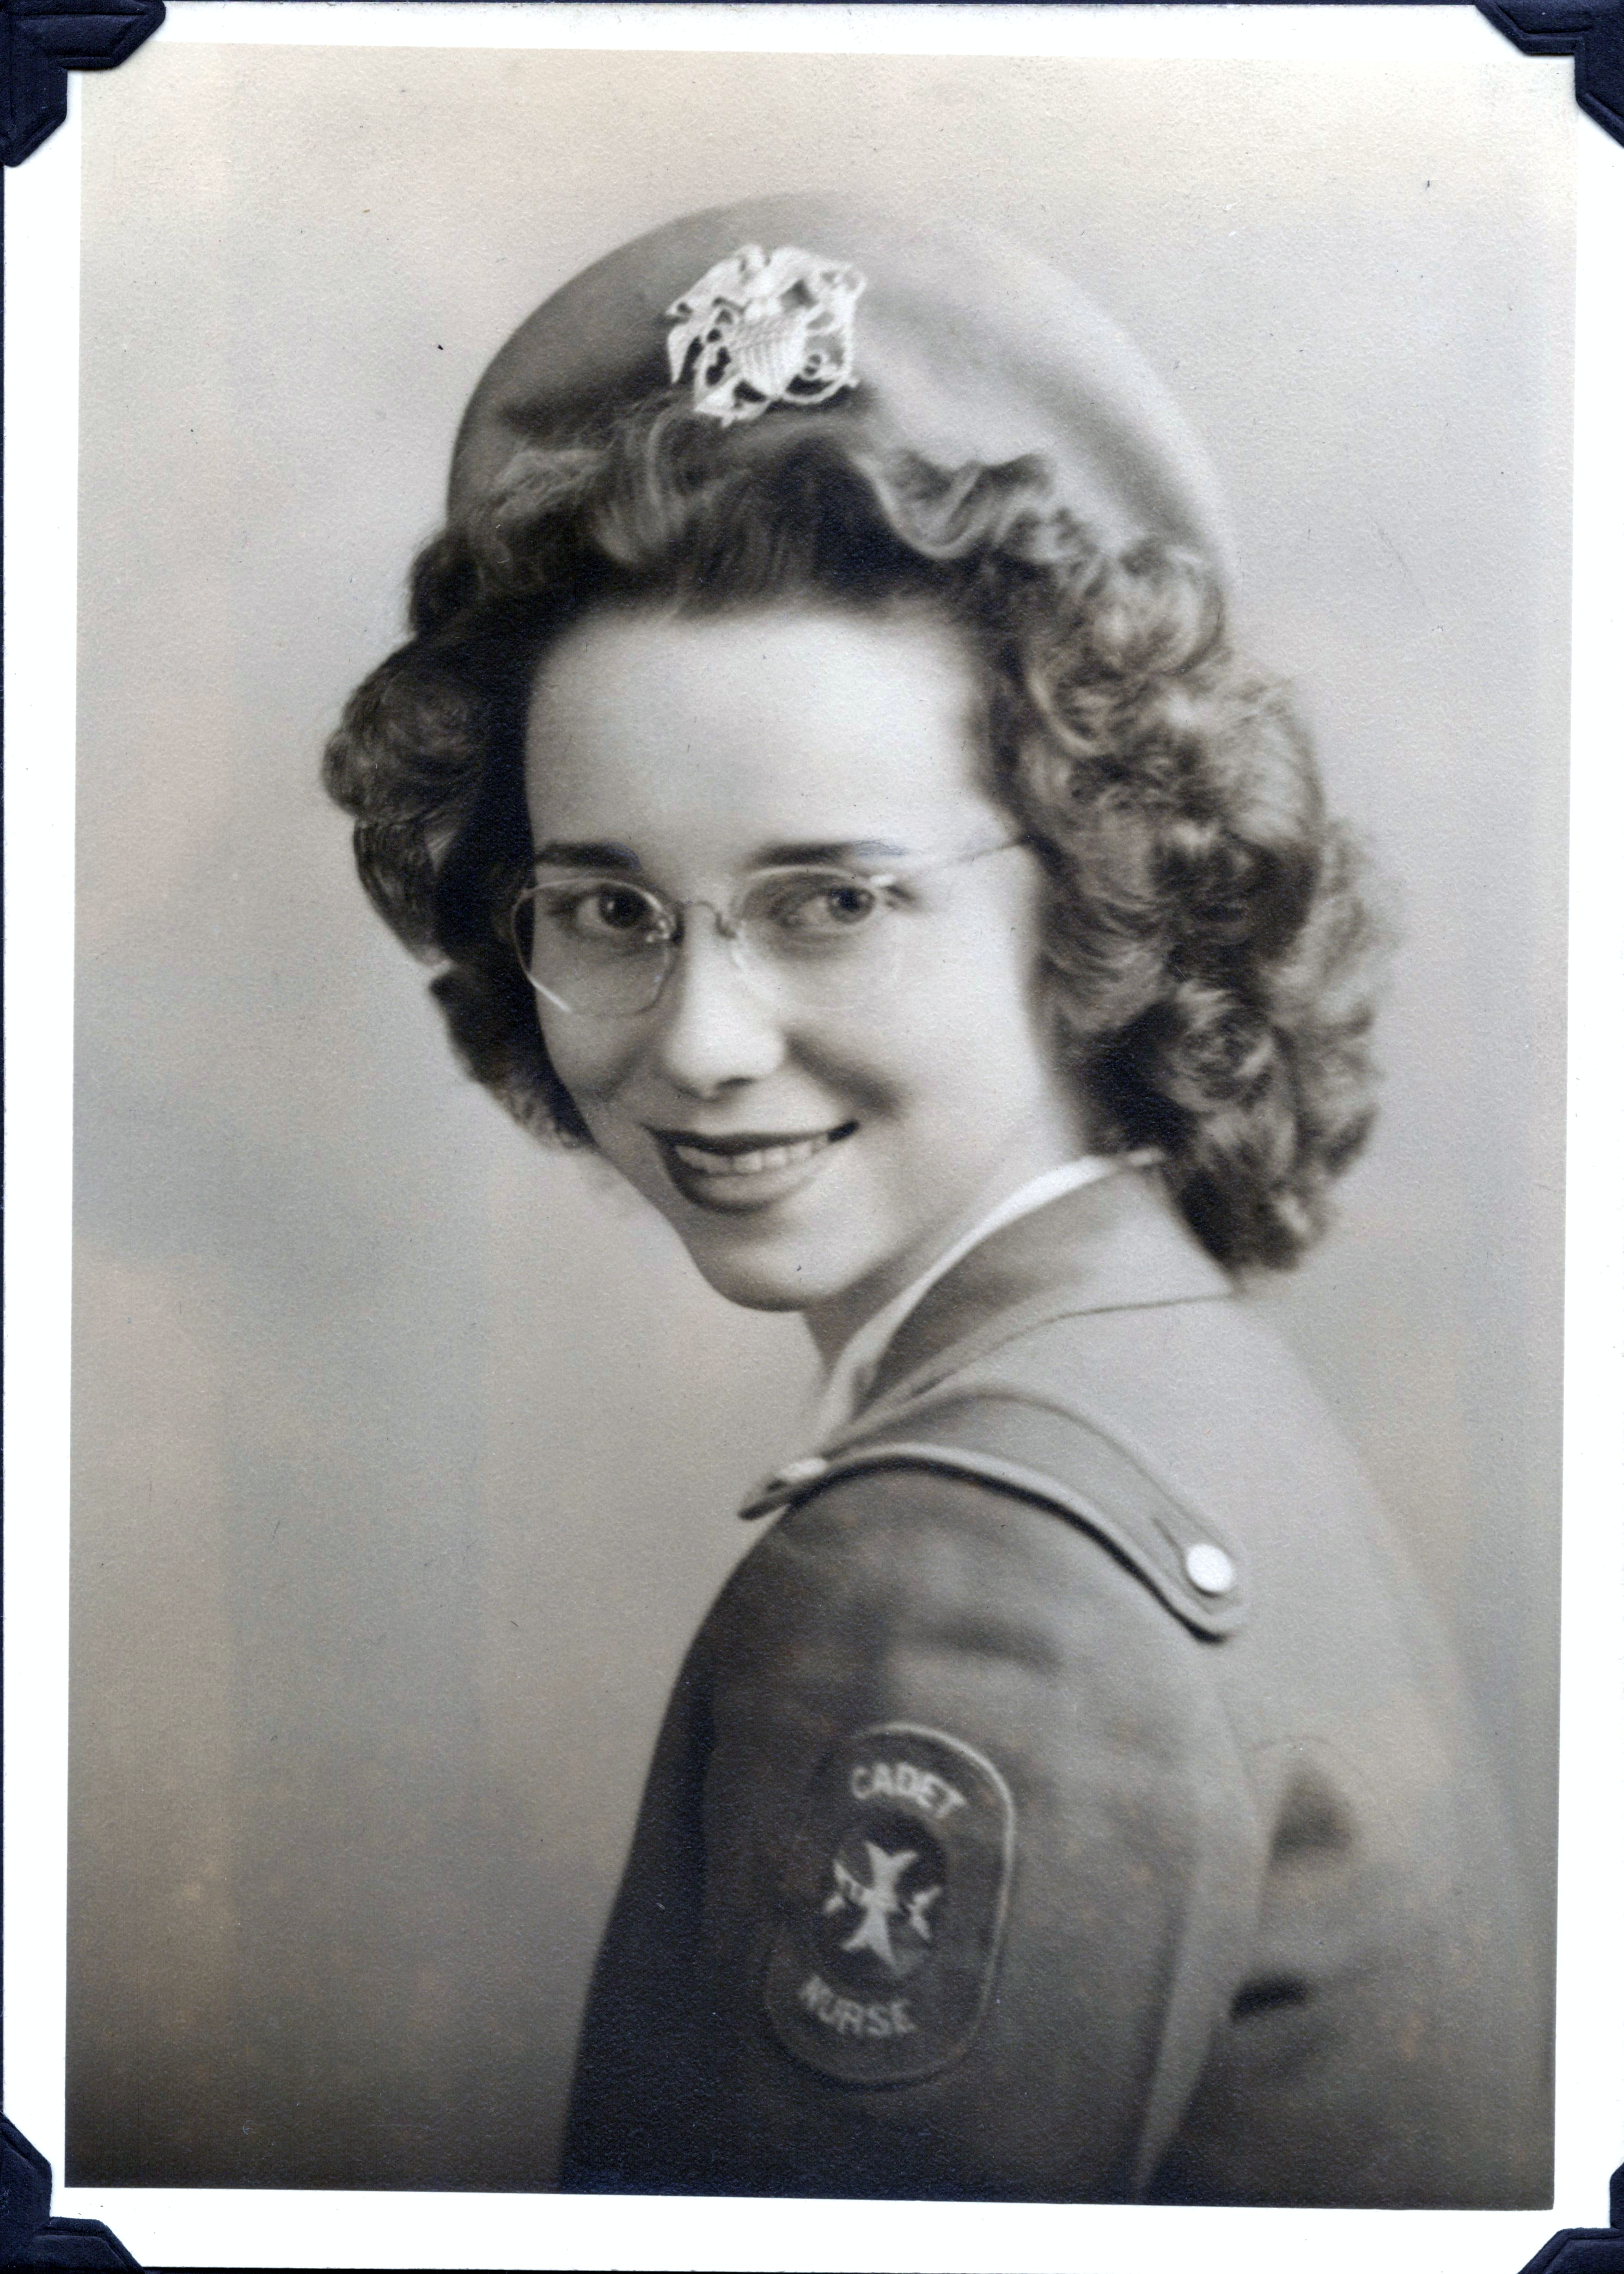 Cadet Nurse Emerson